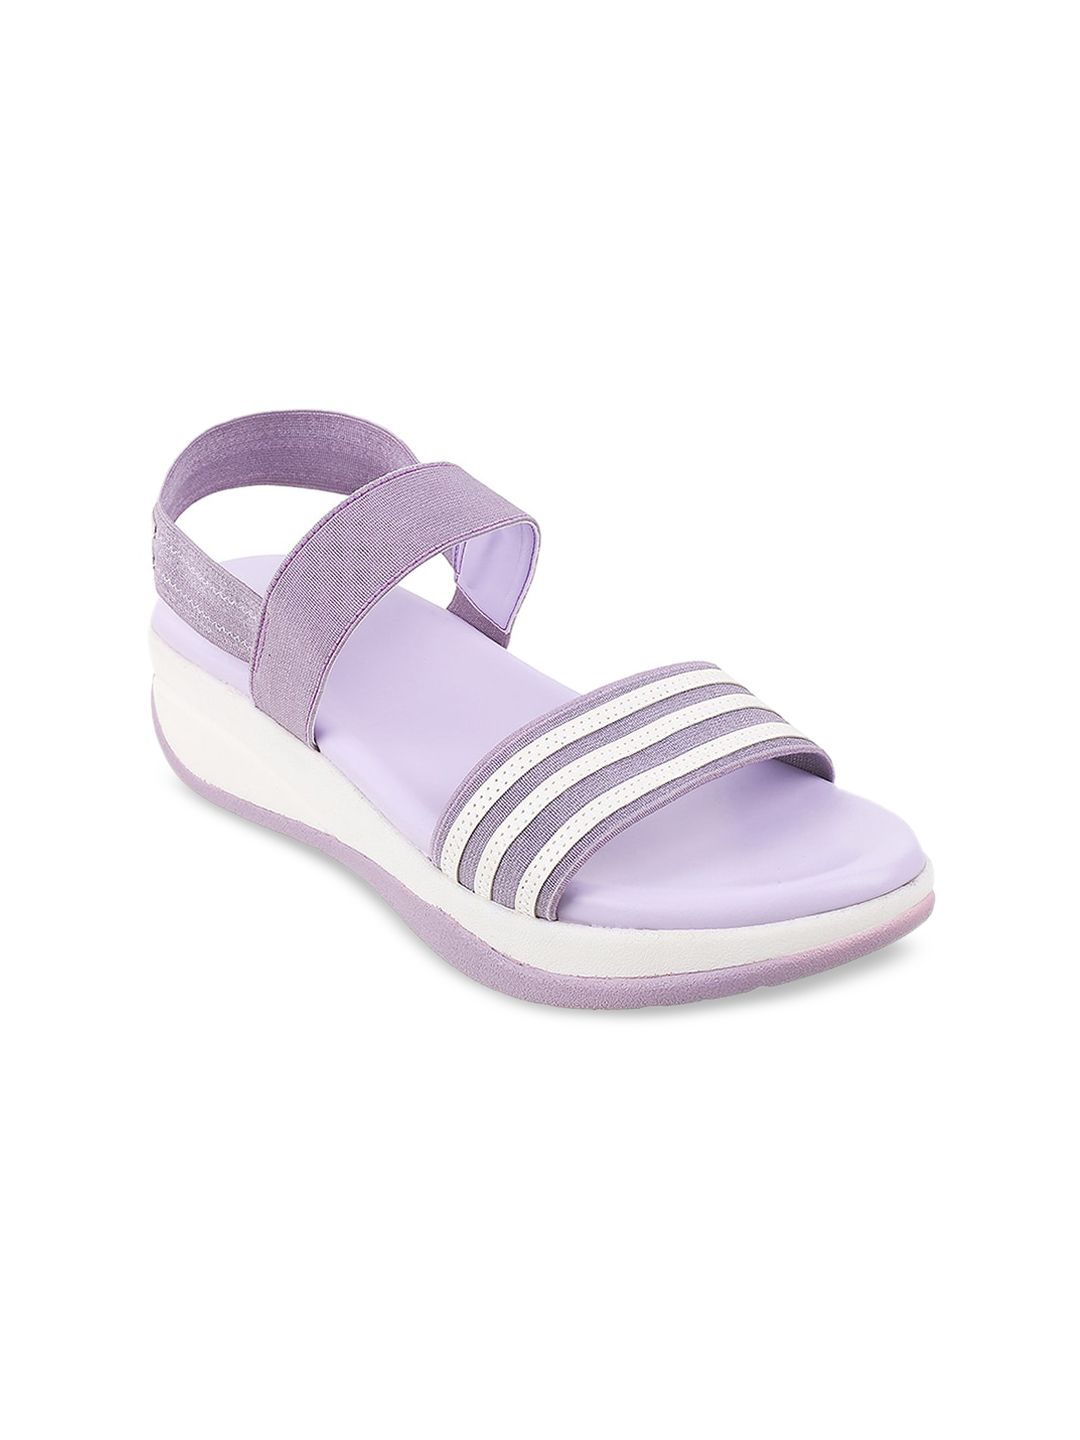 Metro Purple Striped Flatform Sandals Price in India